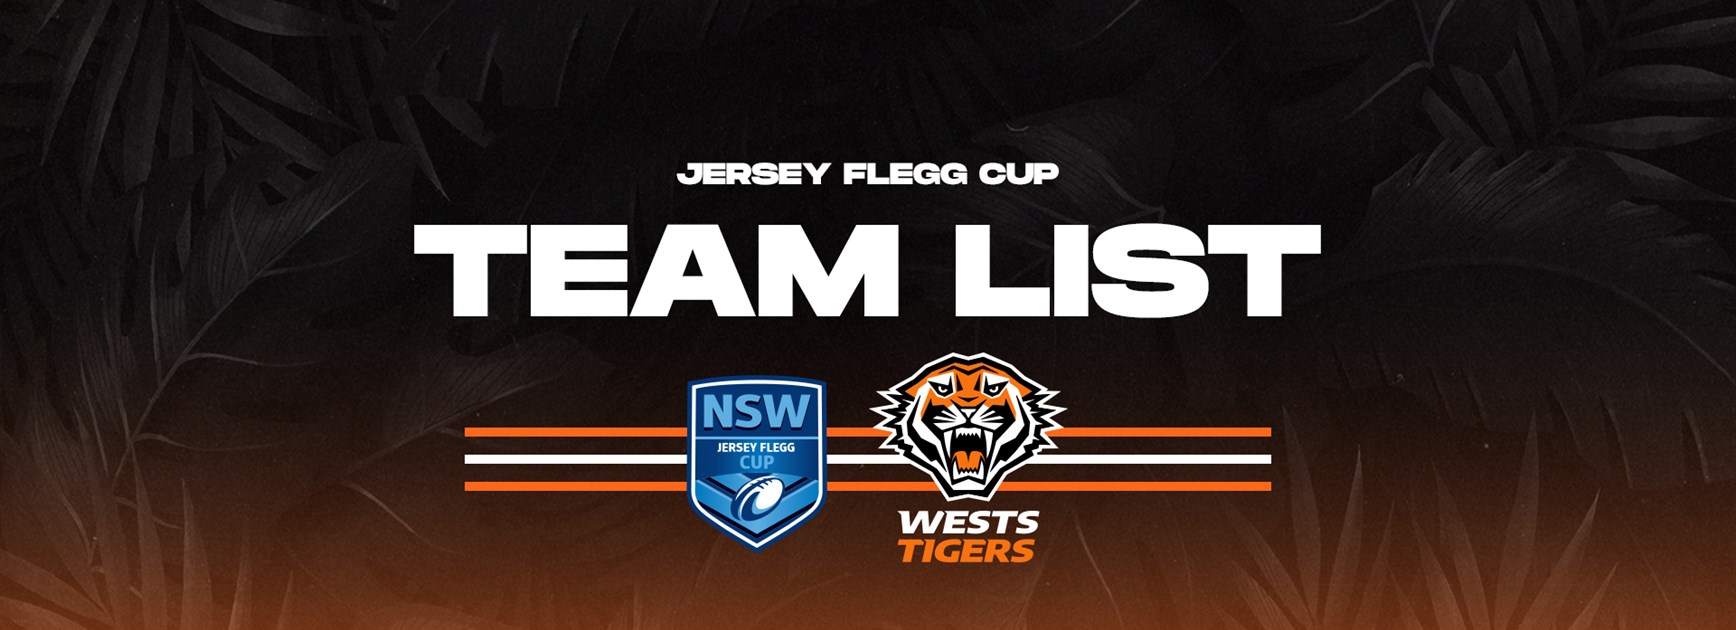 Team List: Jersey Flegg Cup Round 14 vs Sharks